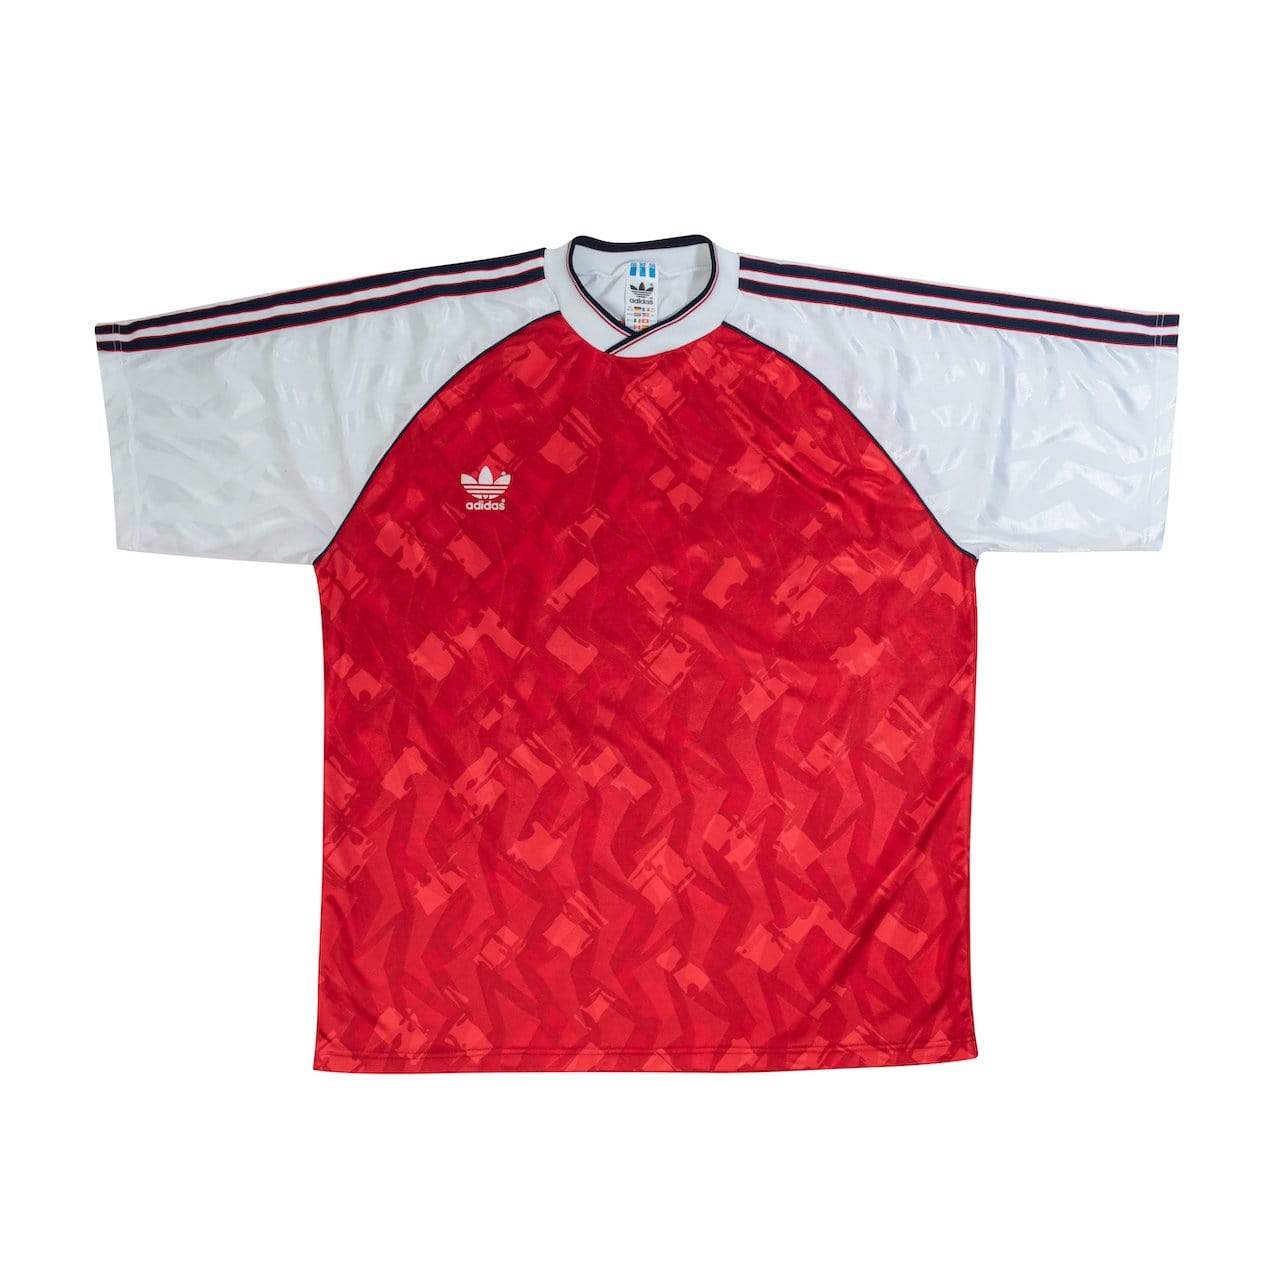 Football Shirt Collective 1992 adidas Yugoslavia-patterned Short-Sleeved Home Shirt (XL)